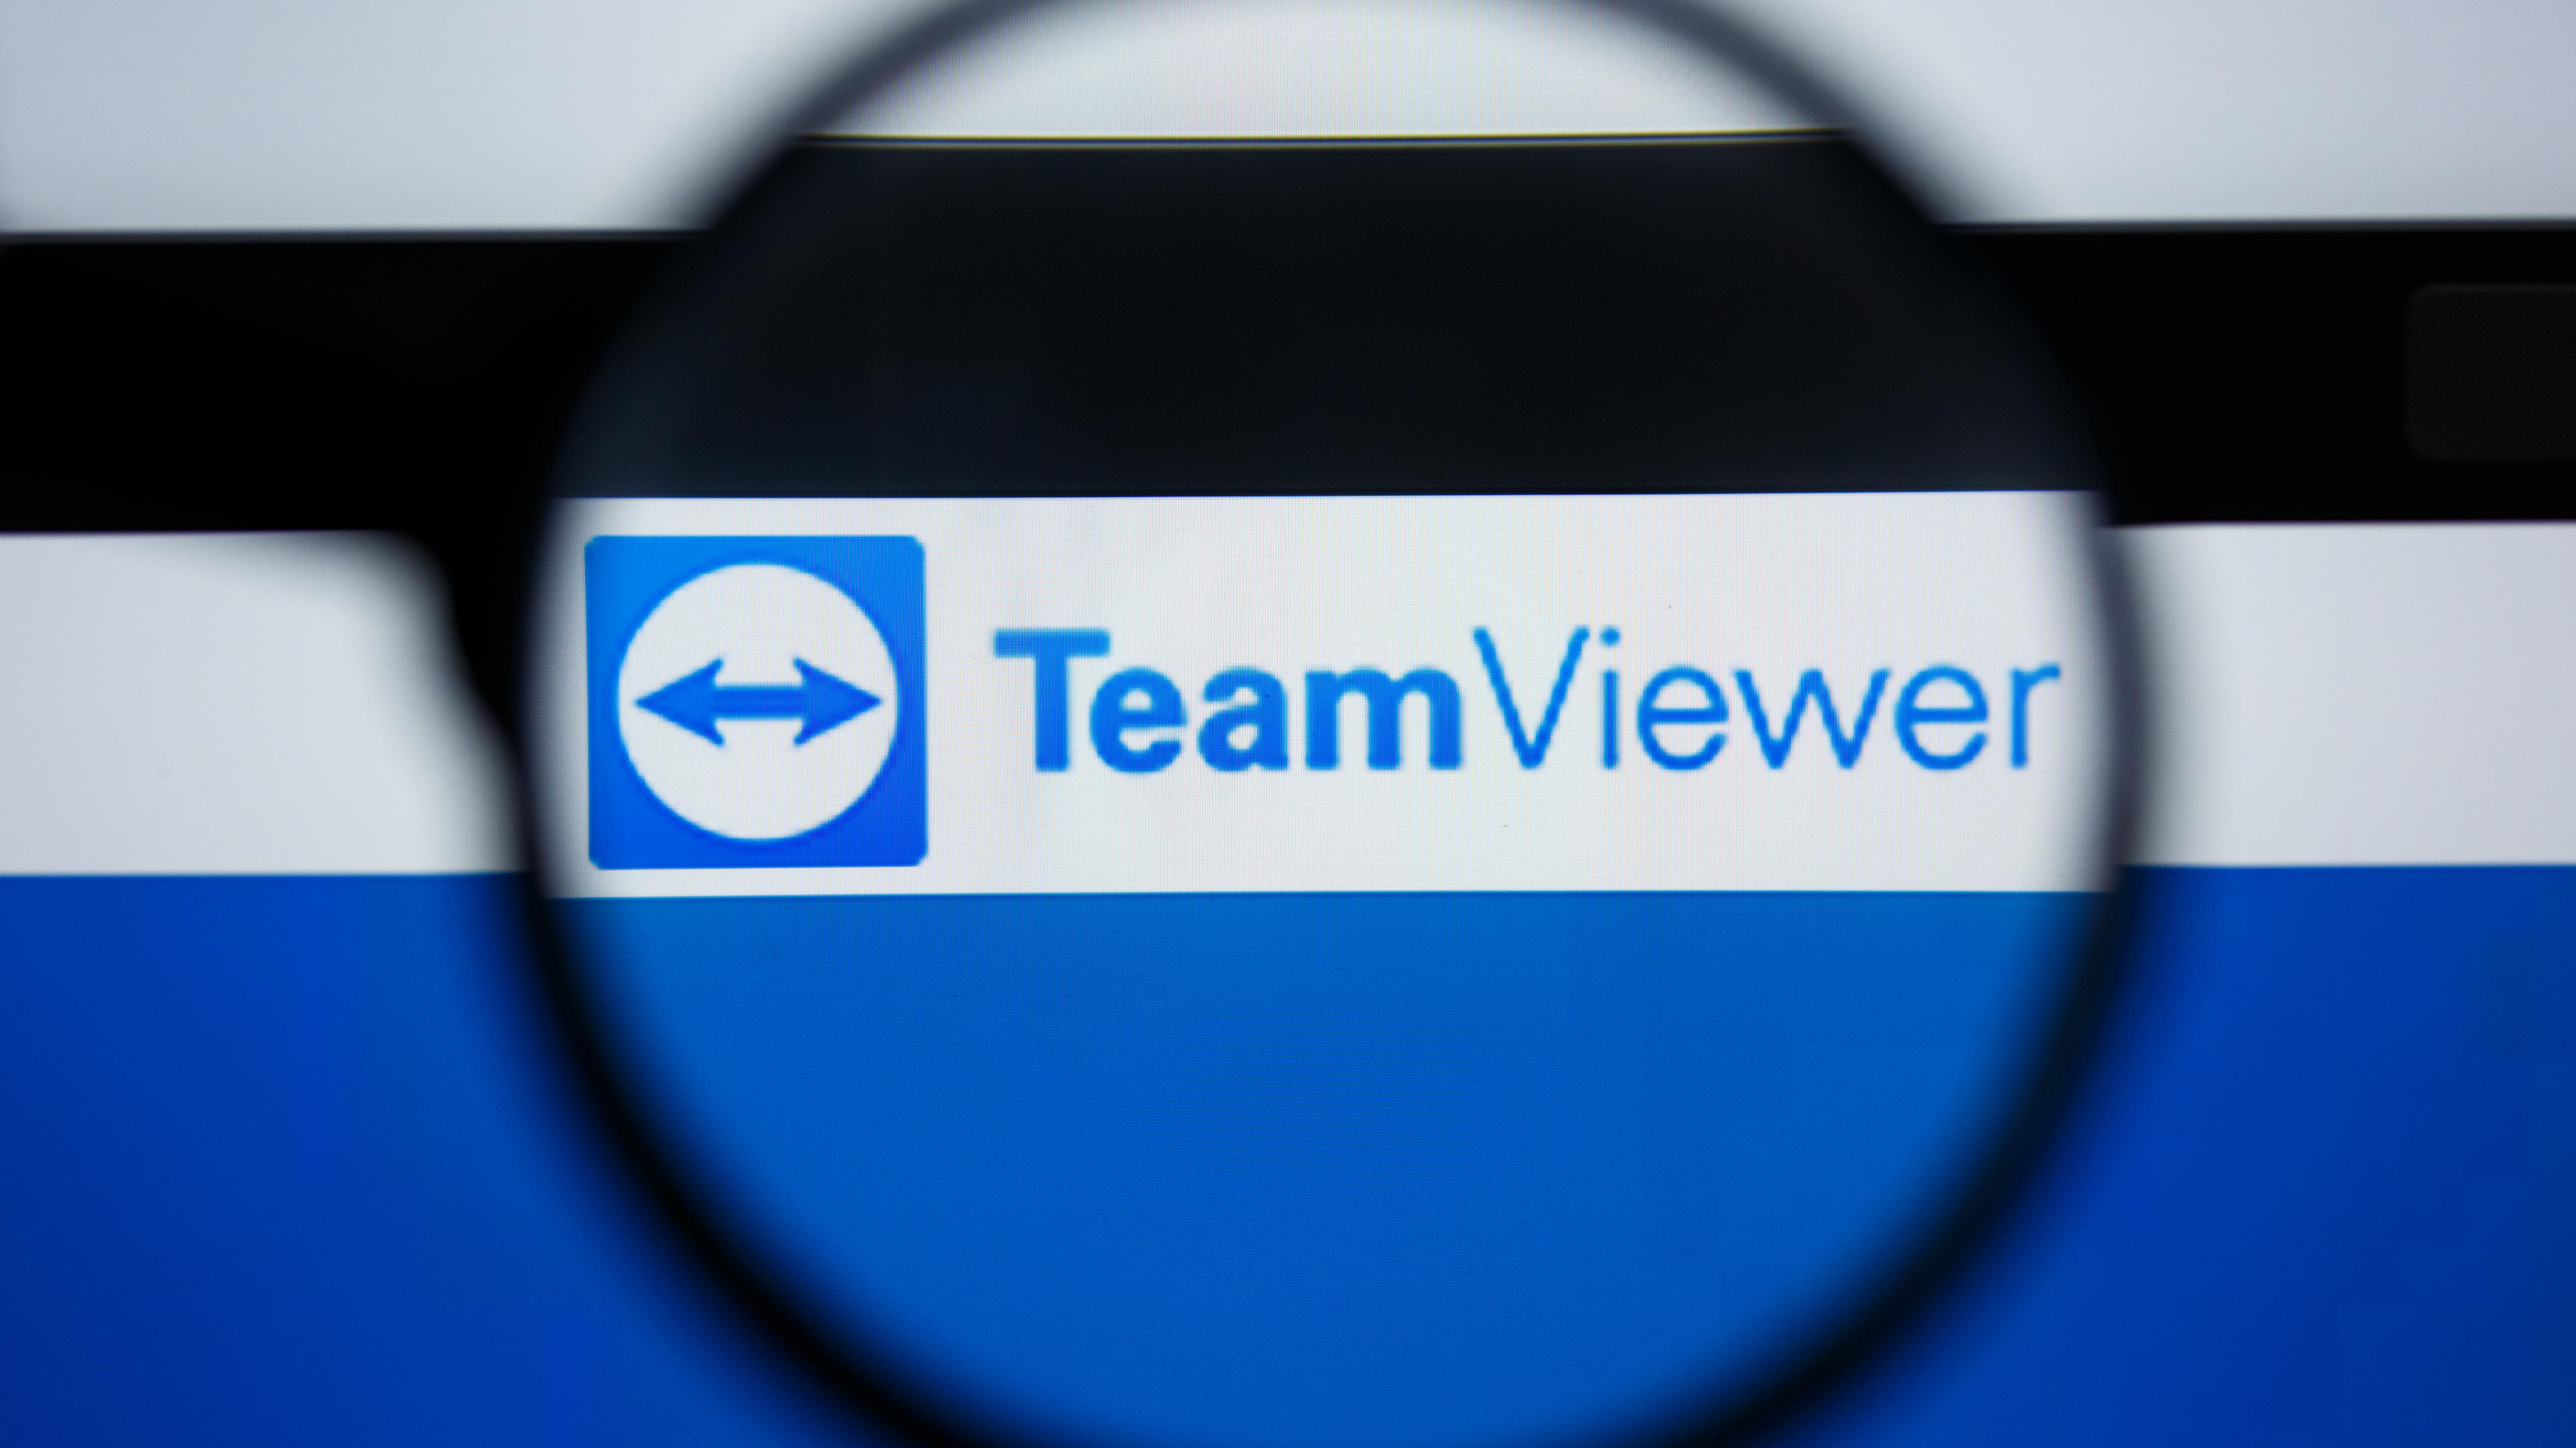 teamviewer software download for windows 10